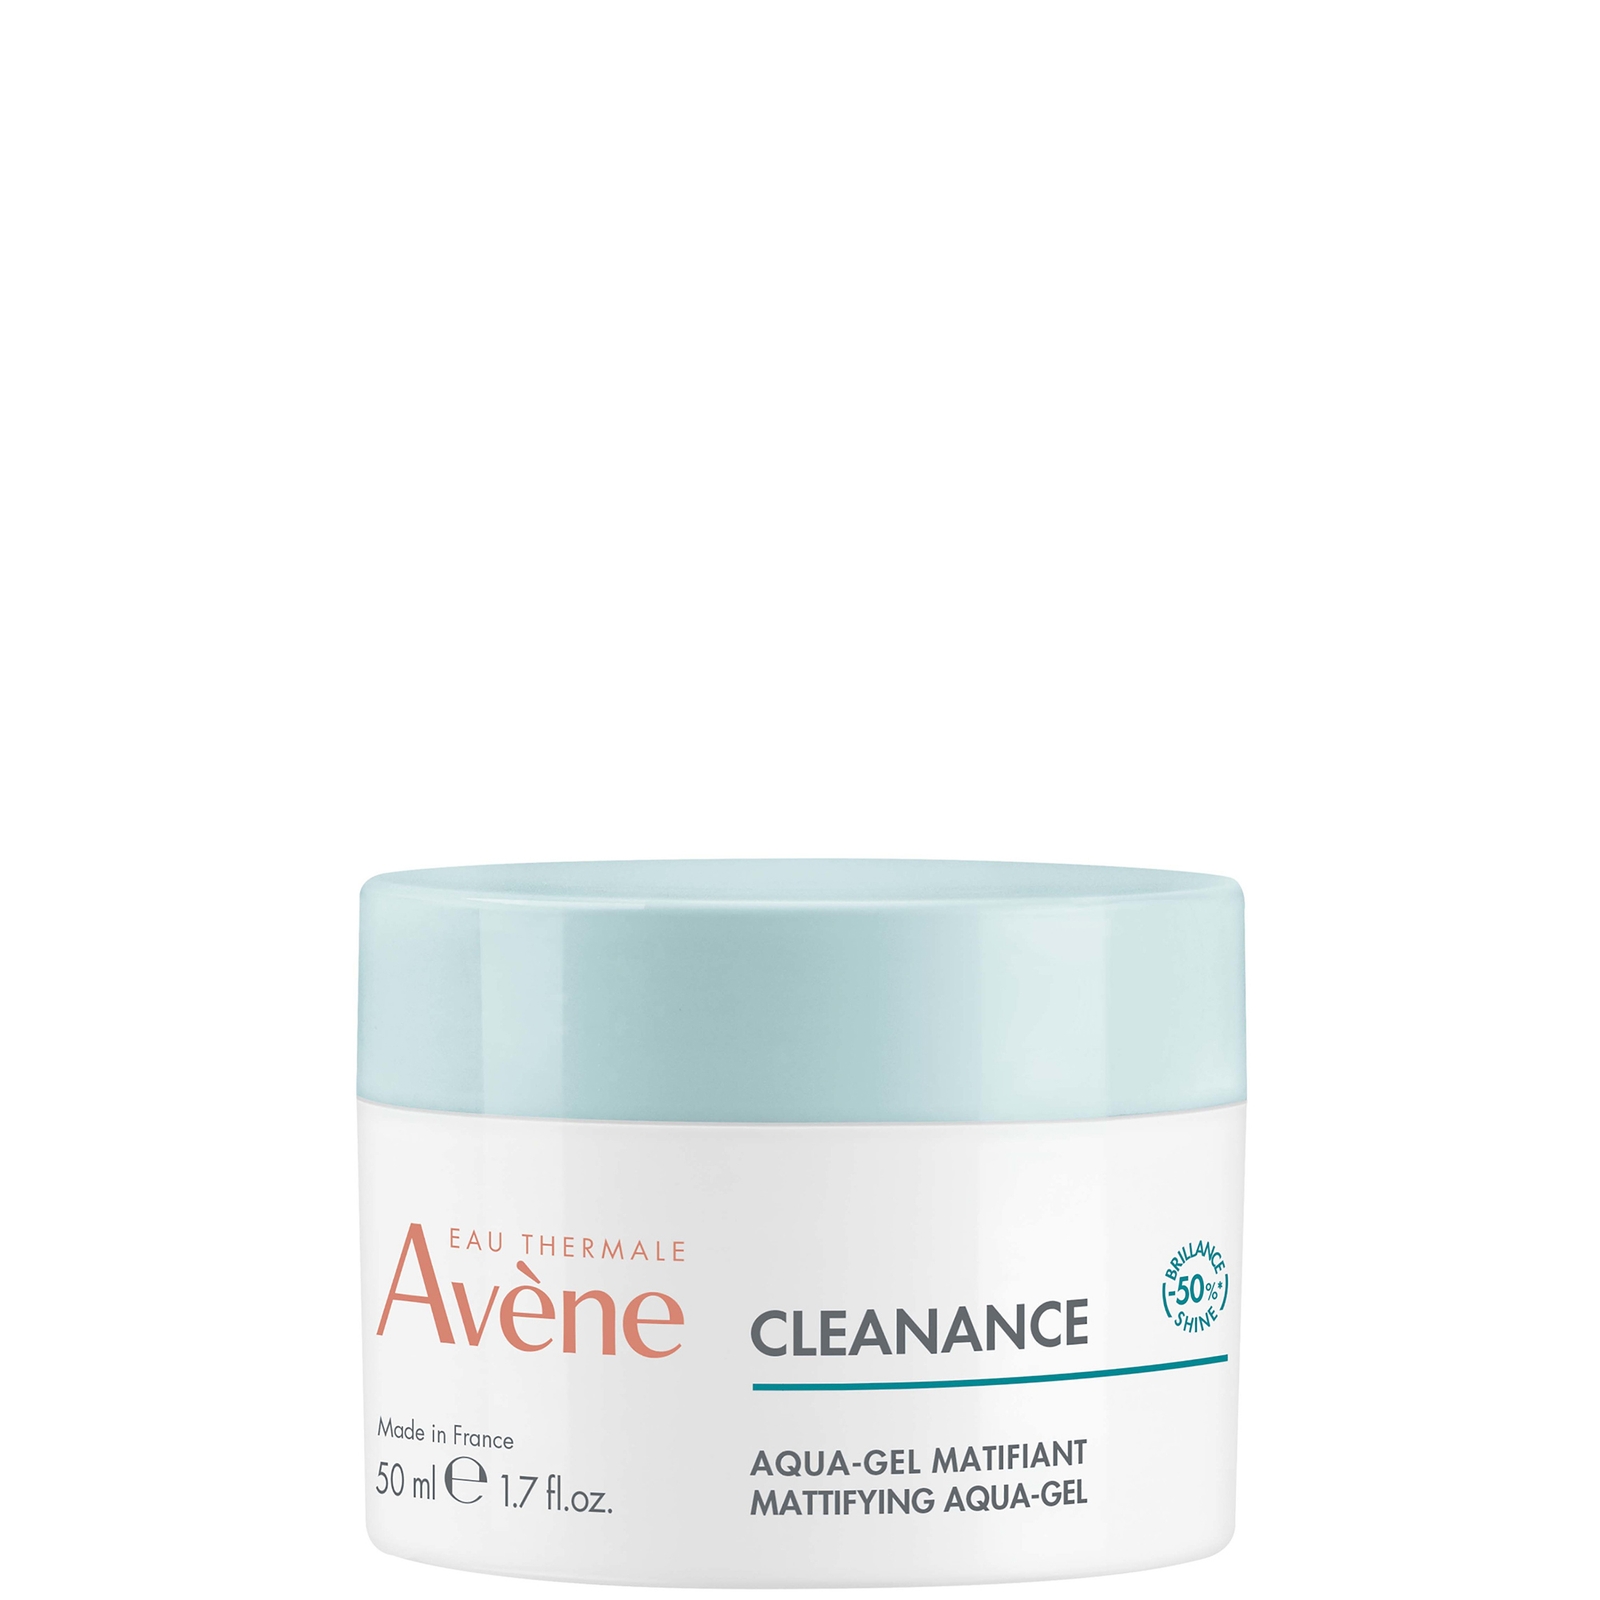 Avene Cleanance Mattifying Aqua-gel 50ml In White